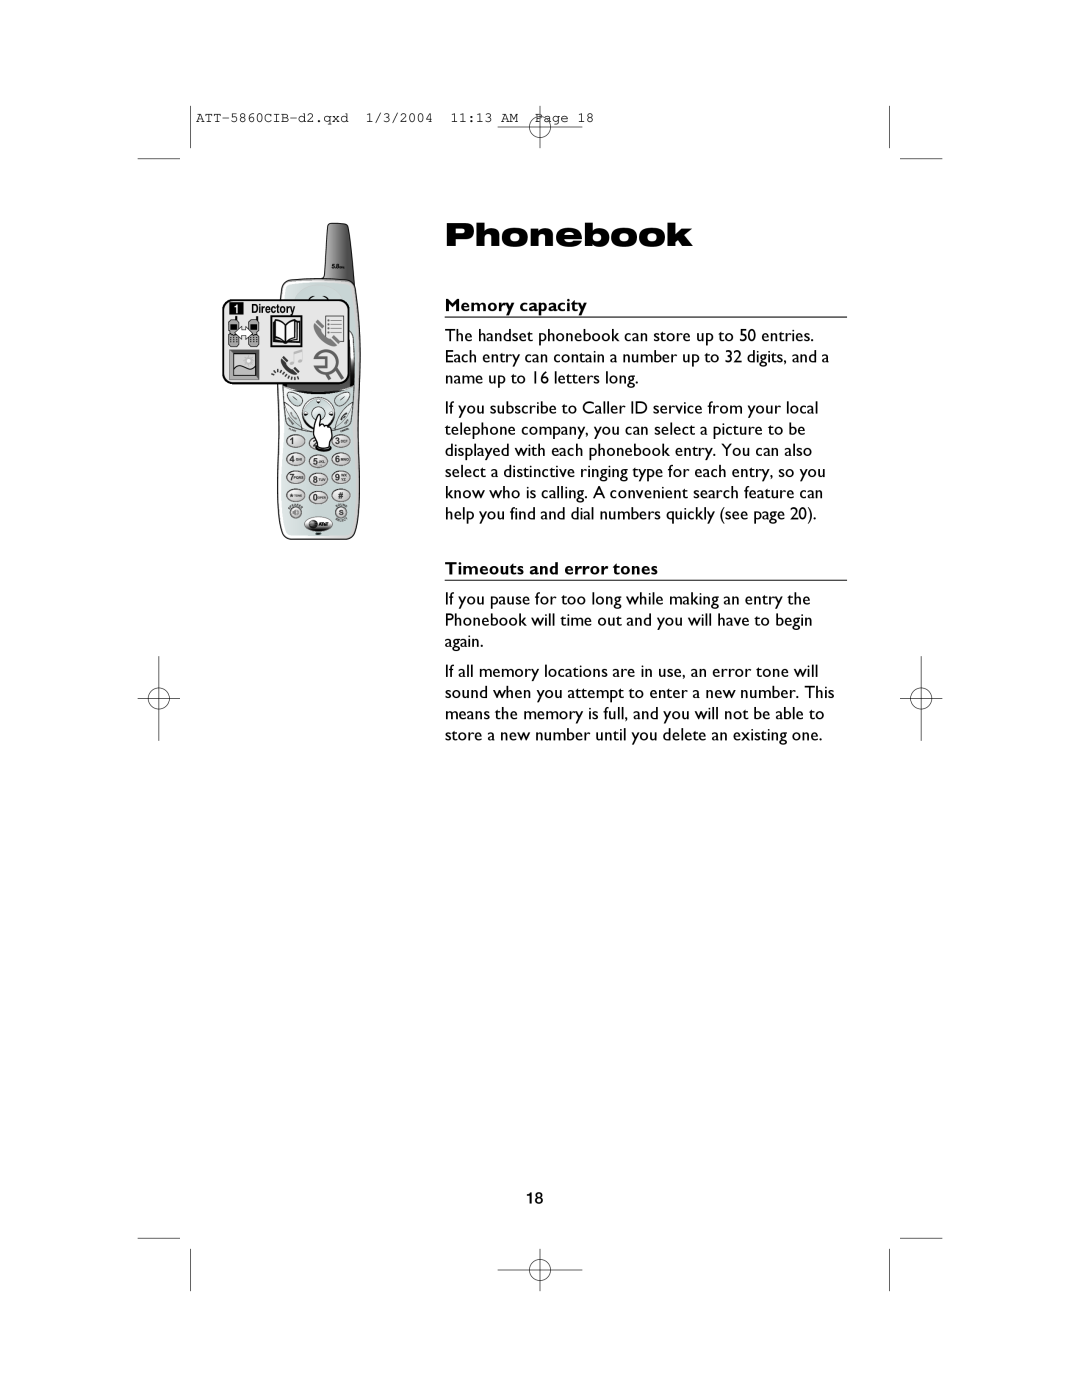 AT&T E5860 user manual Phonebook, Memory capacity, Timeouts and error tones 